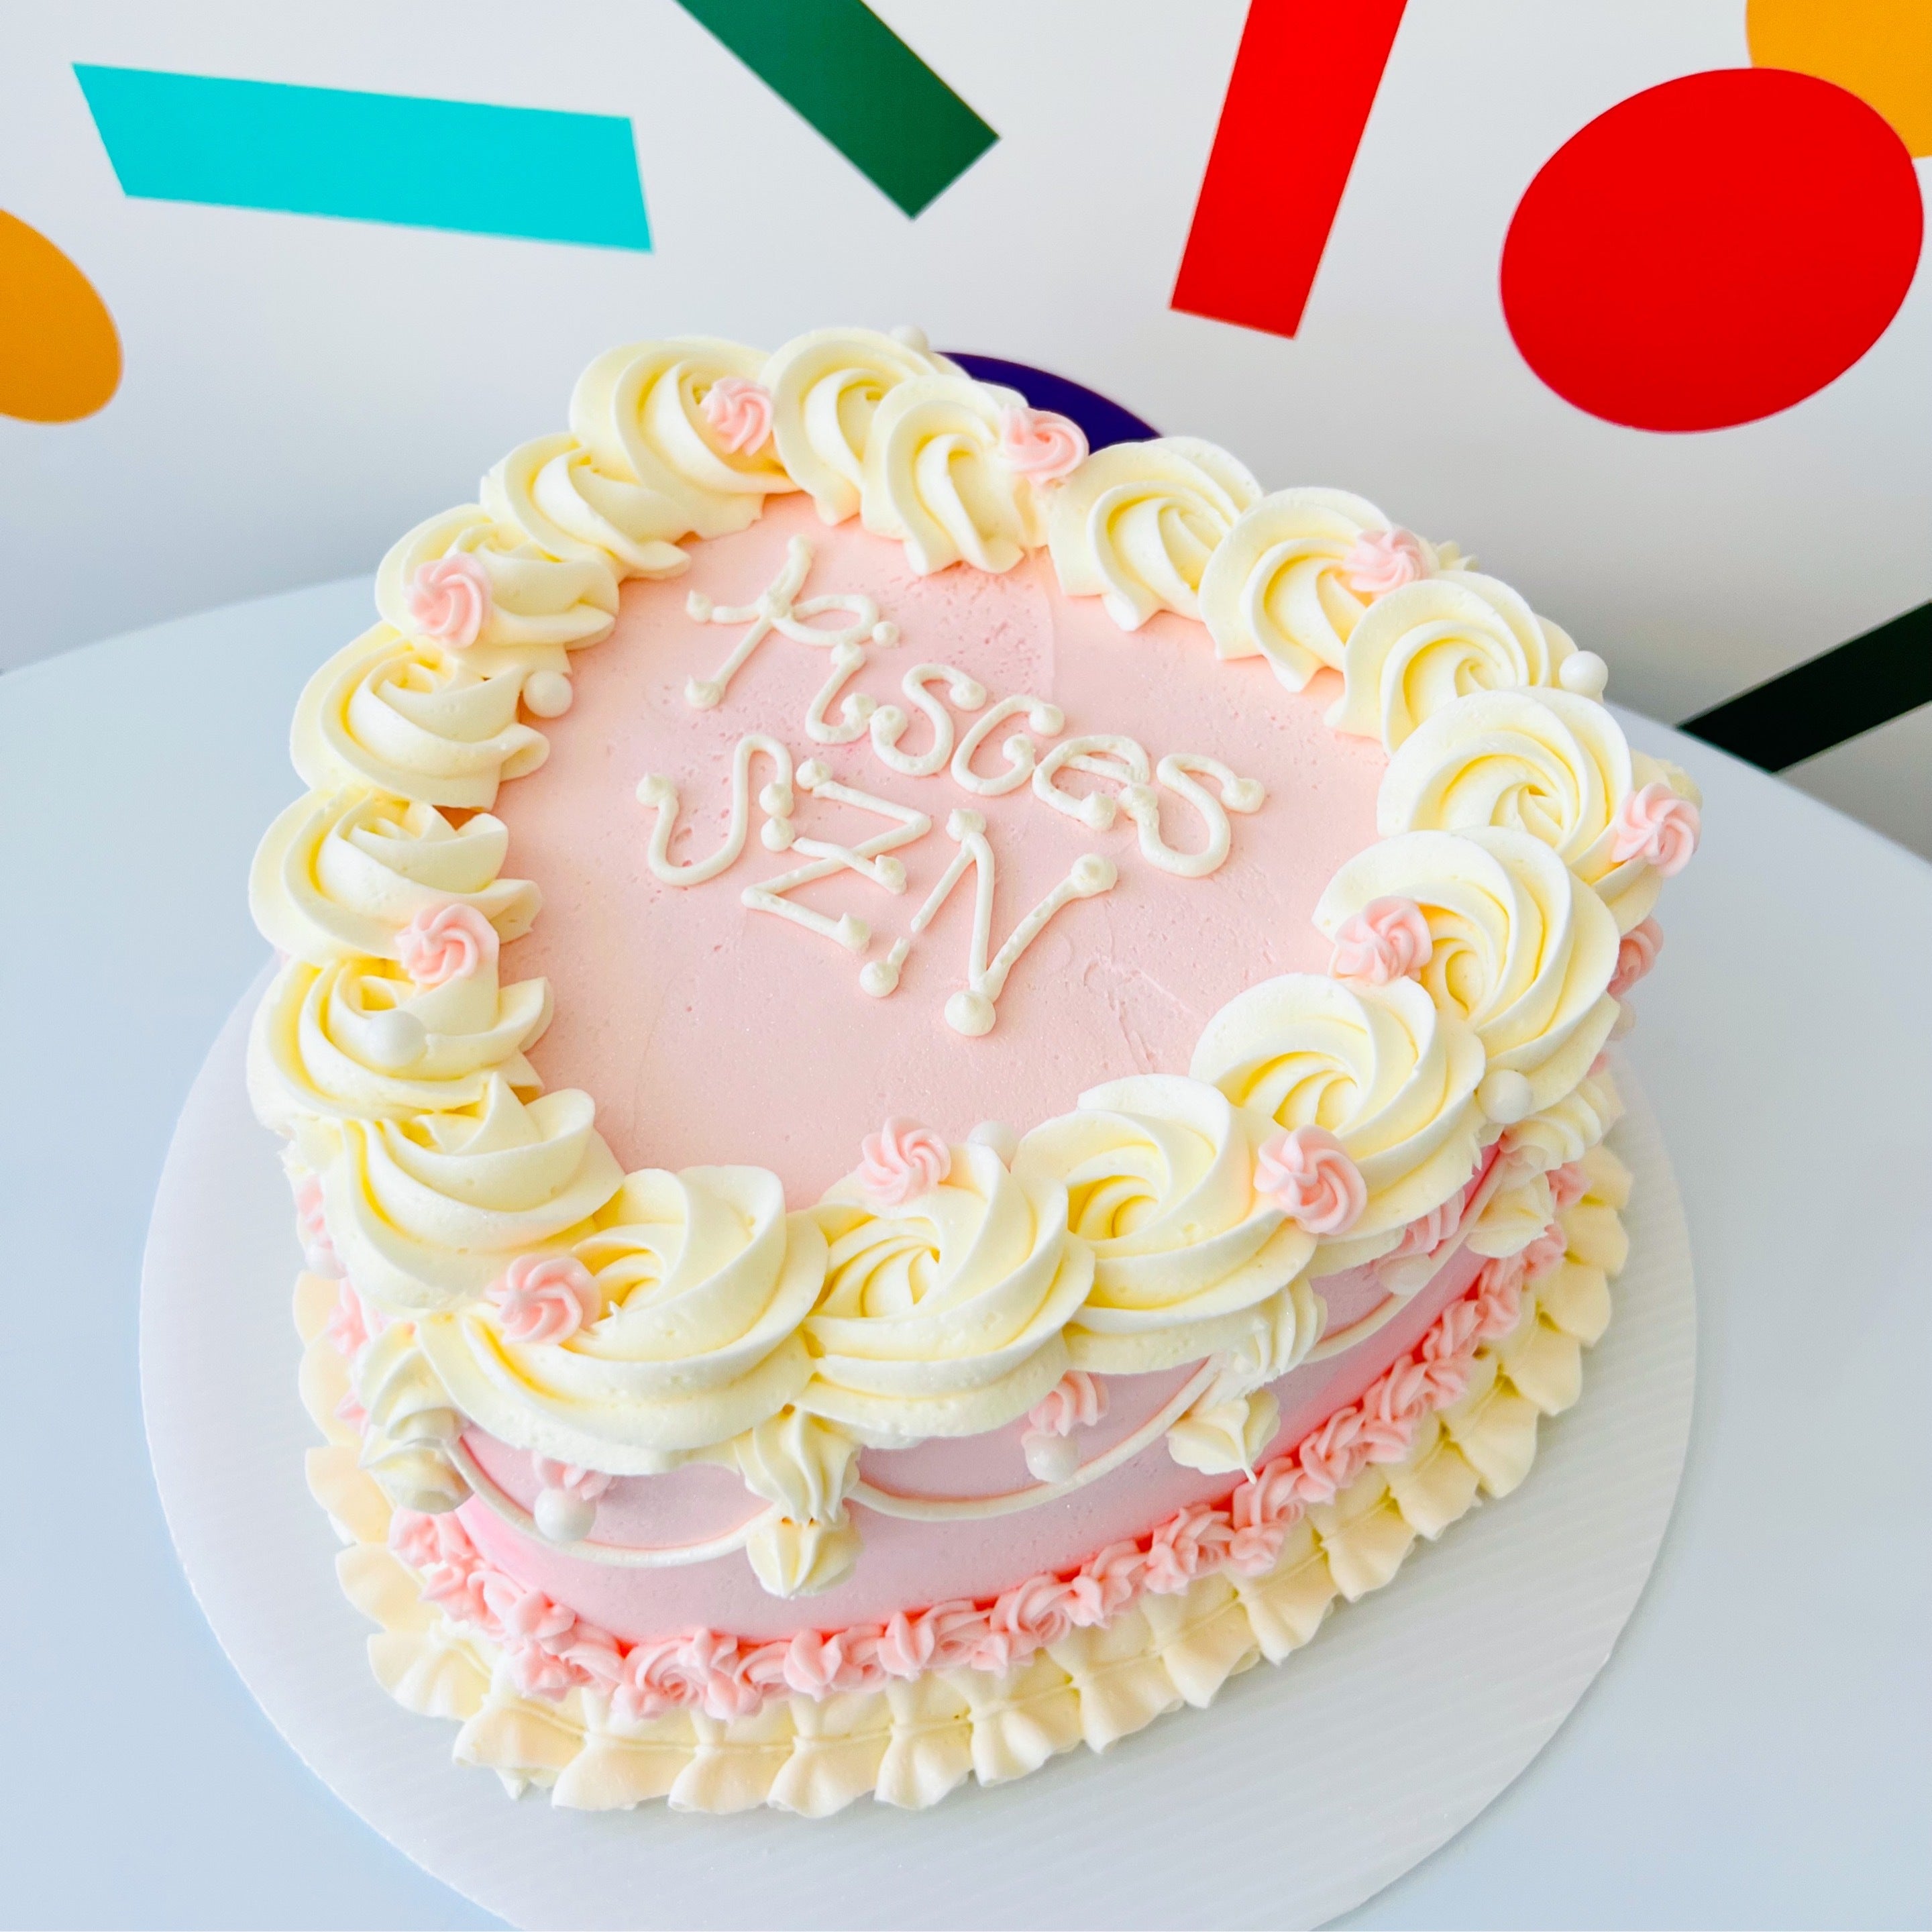 Scorpio cake. #scorpio #cakes | Order cake, 10 birthday cake, Cake